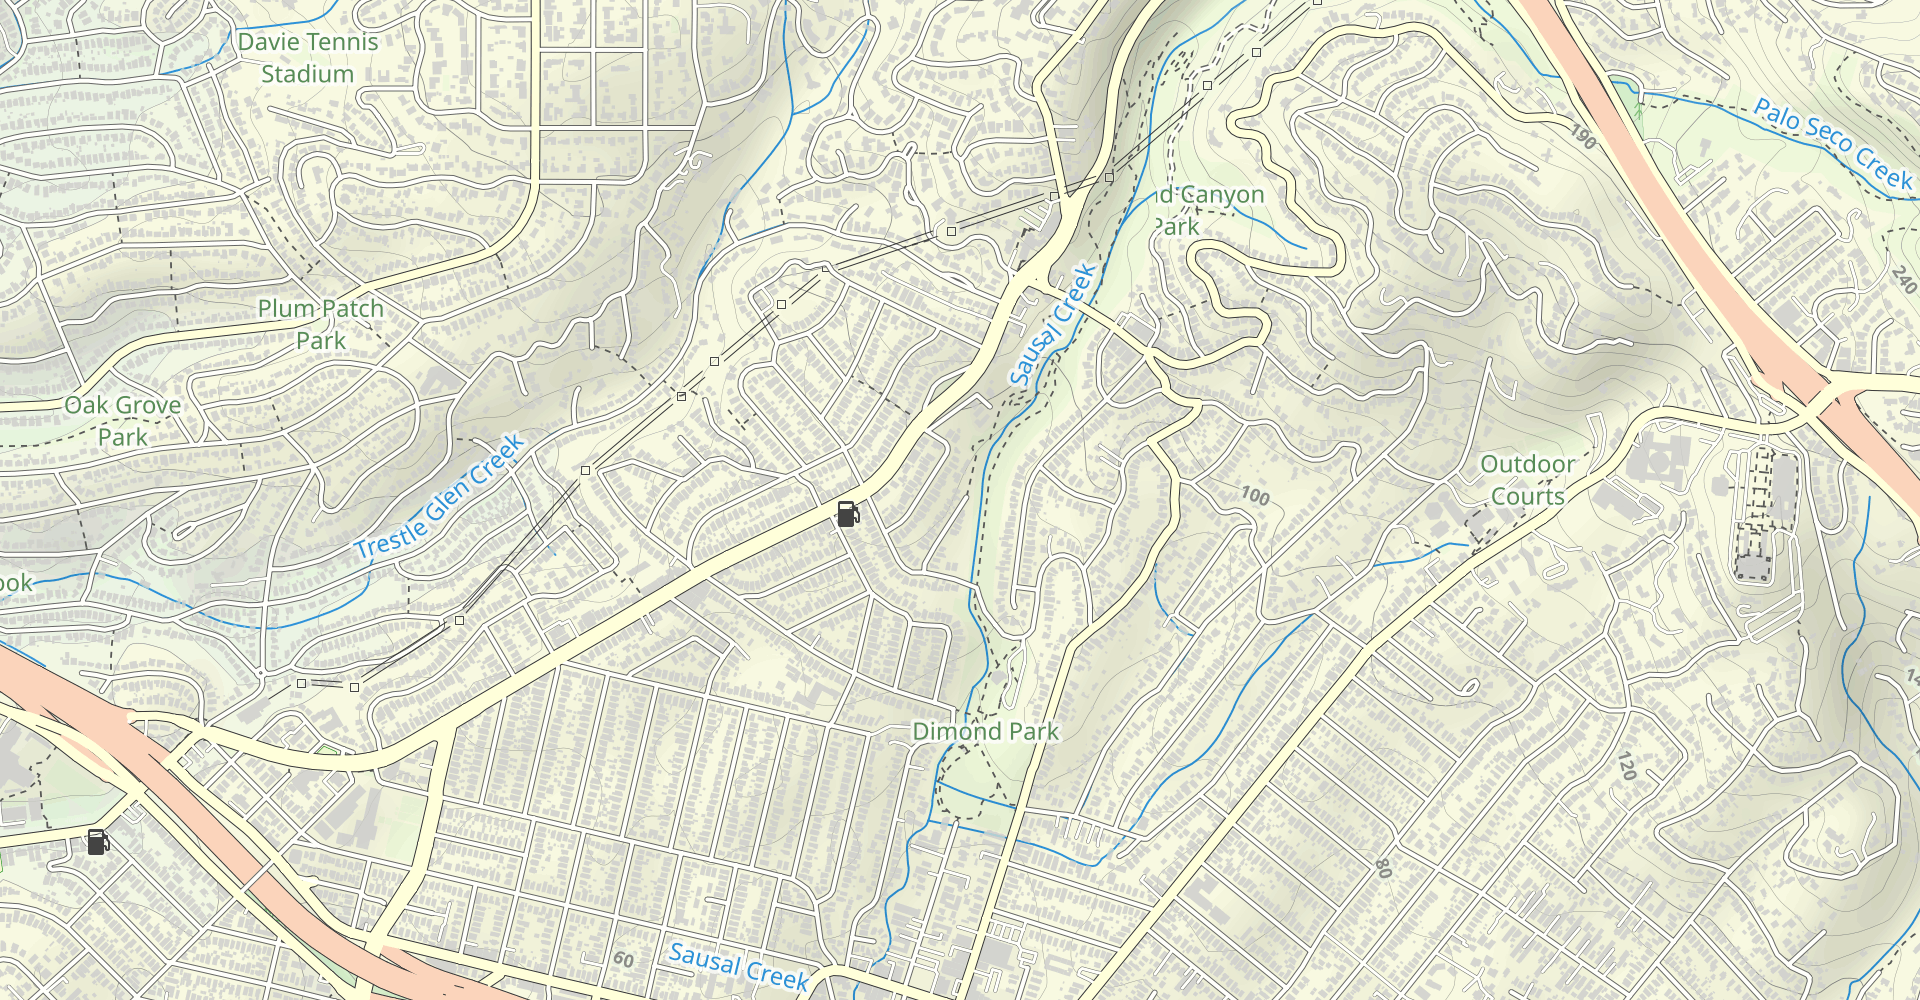 Old Cañon Trail and Sausal Creek Loop